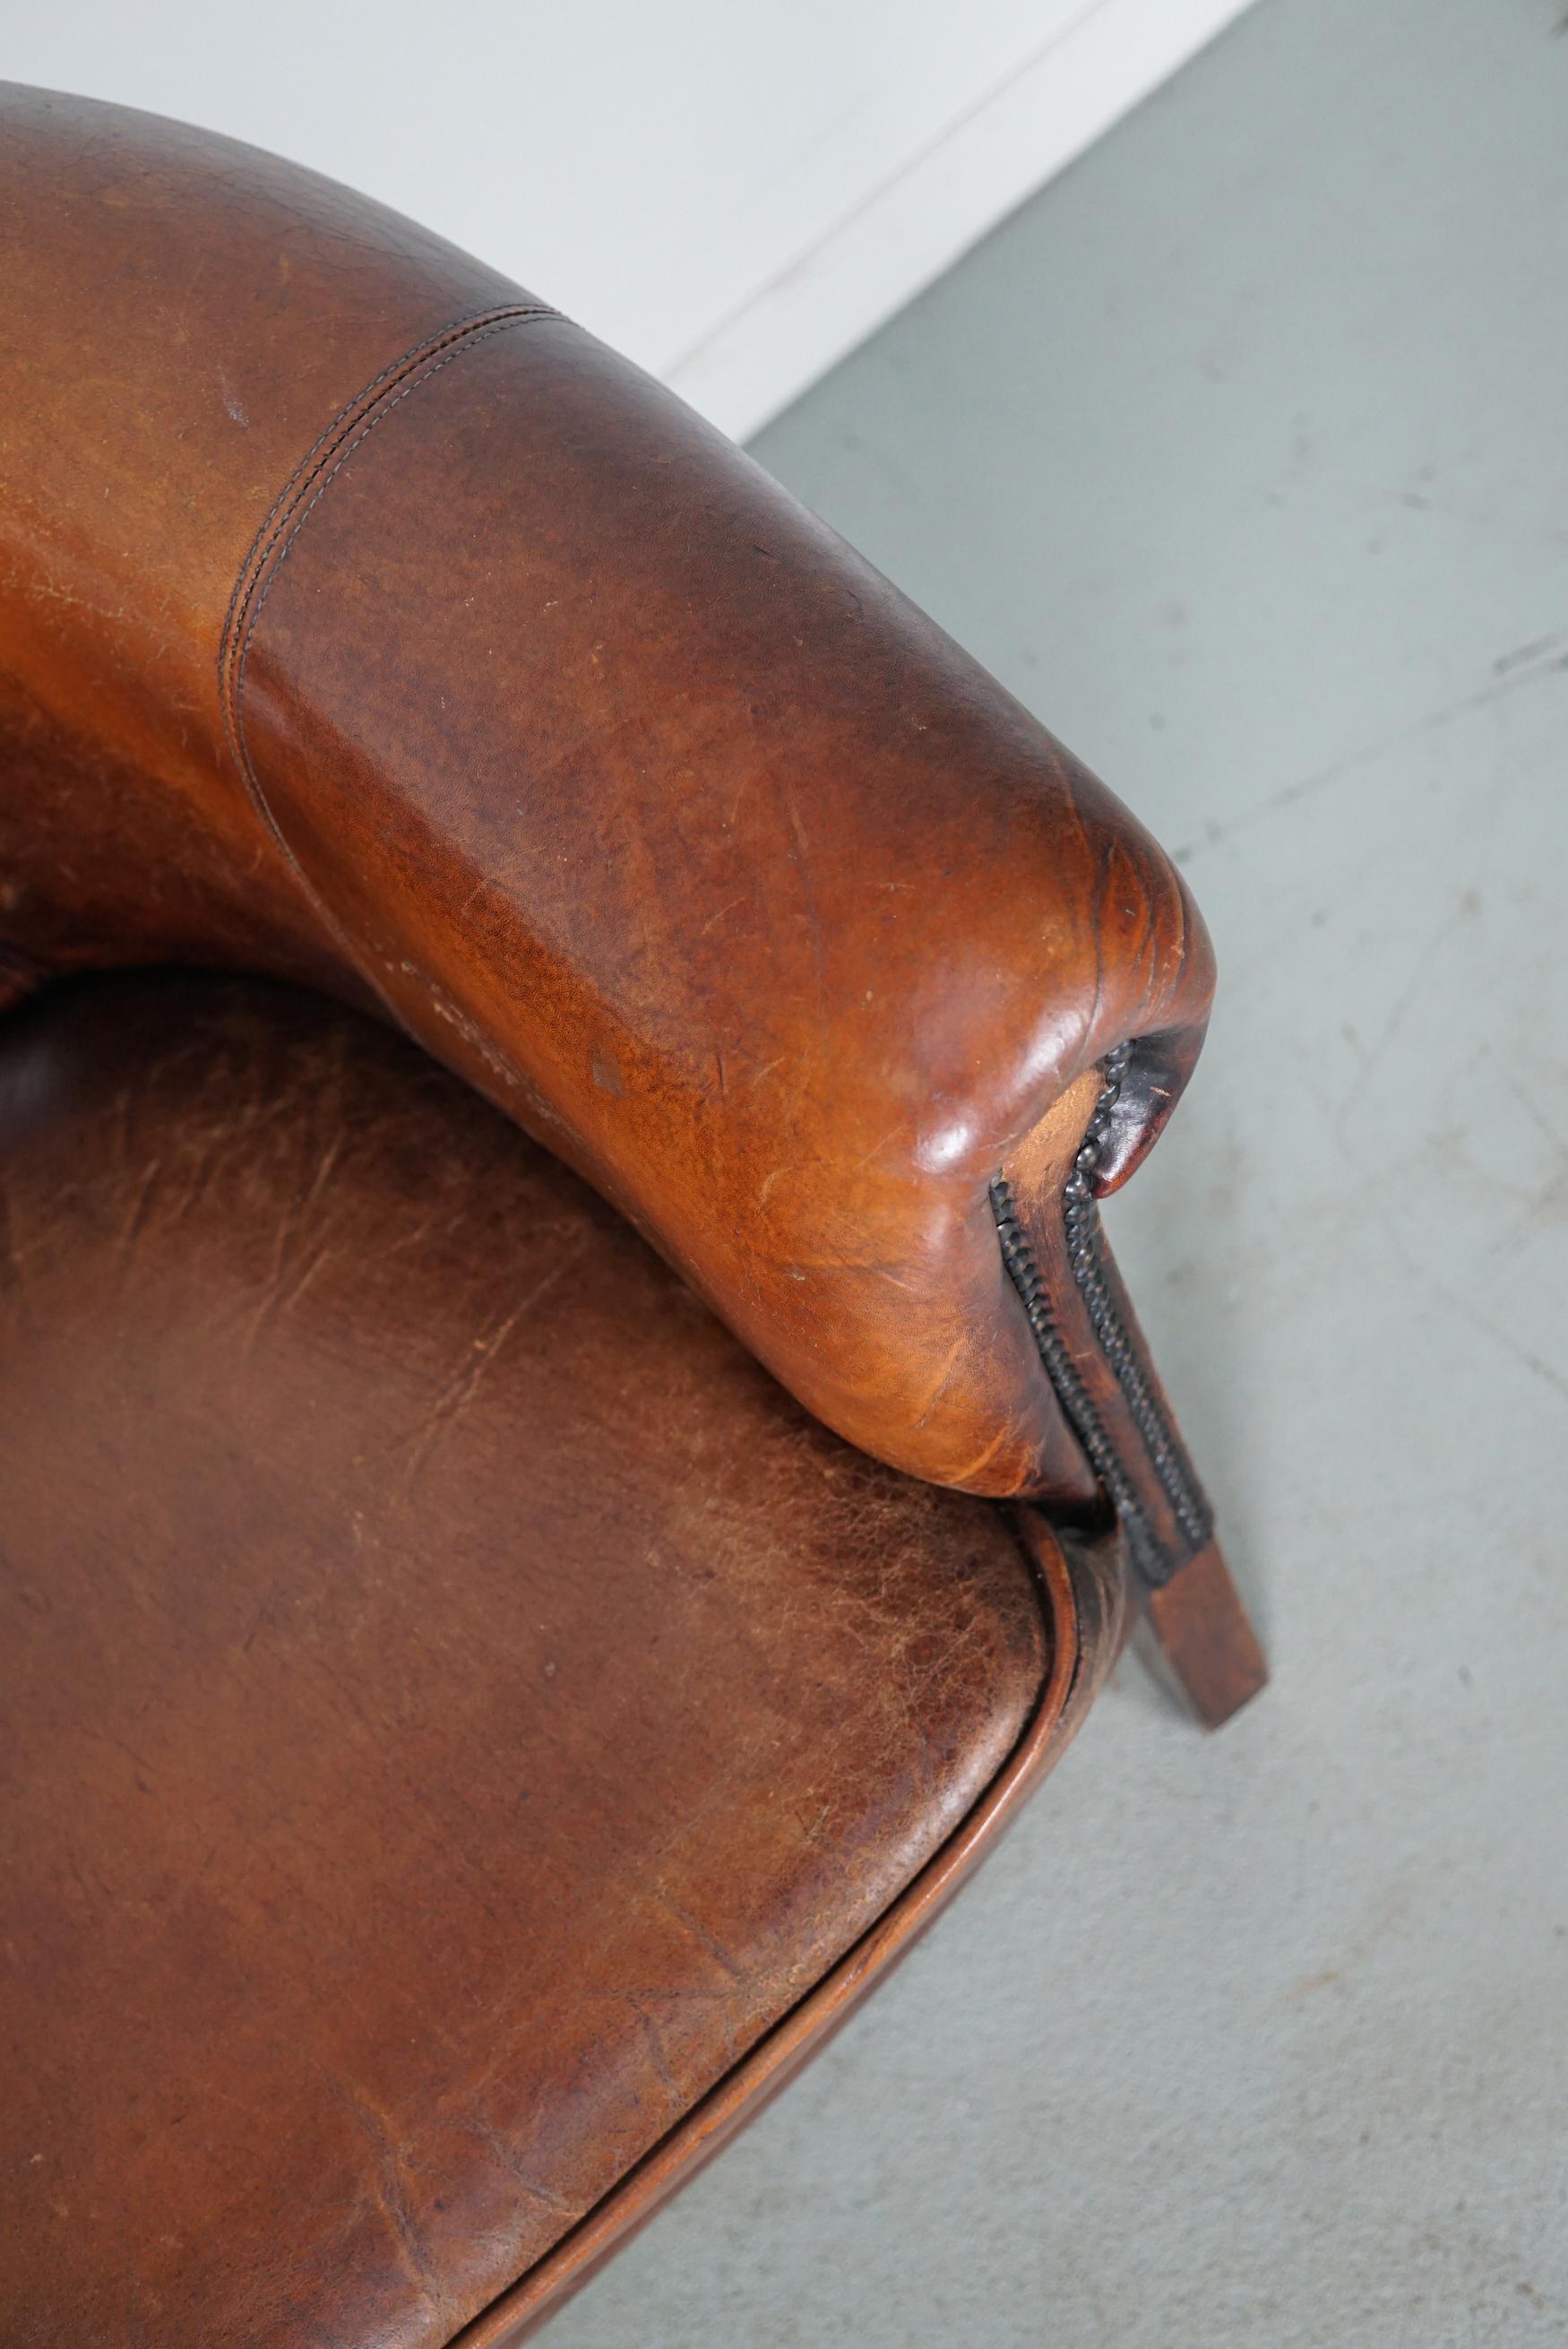 Vintage Dutch Cognac Colored Leather Club Chair For Sale 7